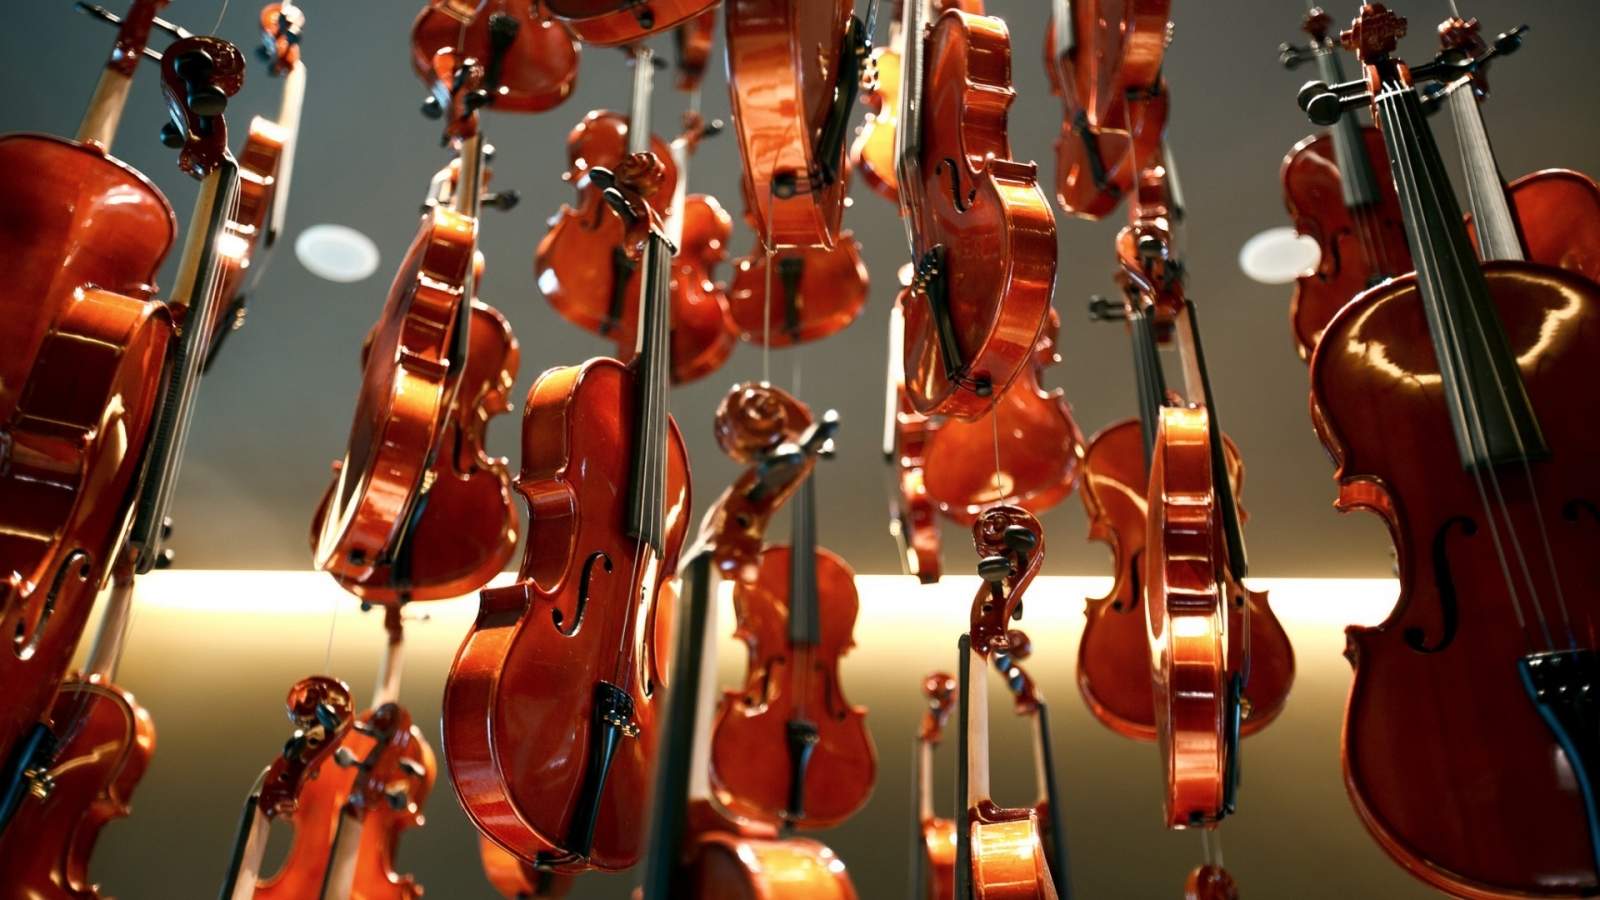 New Violins for 1600 x 900 HDTV resolution